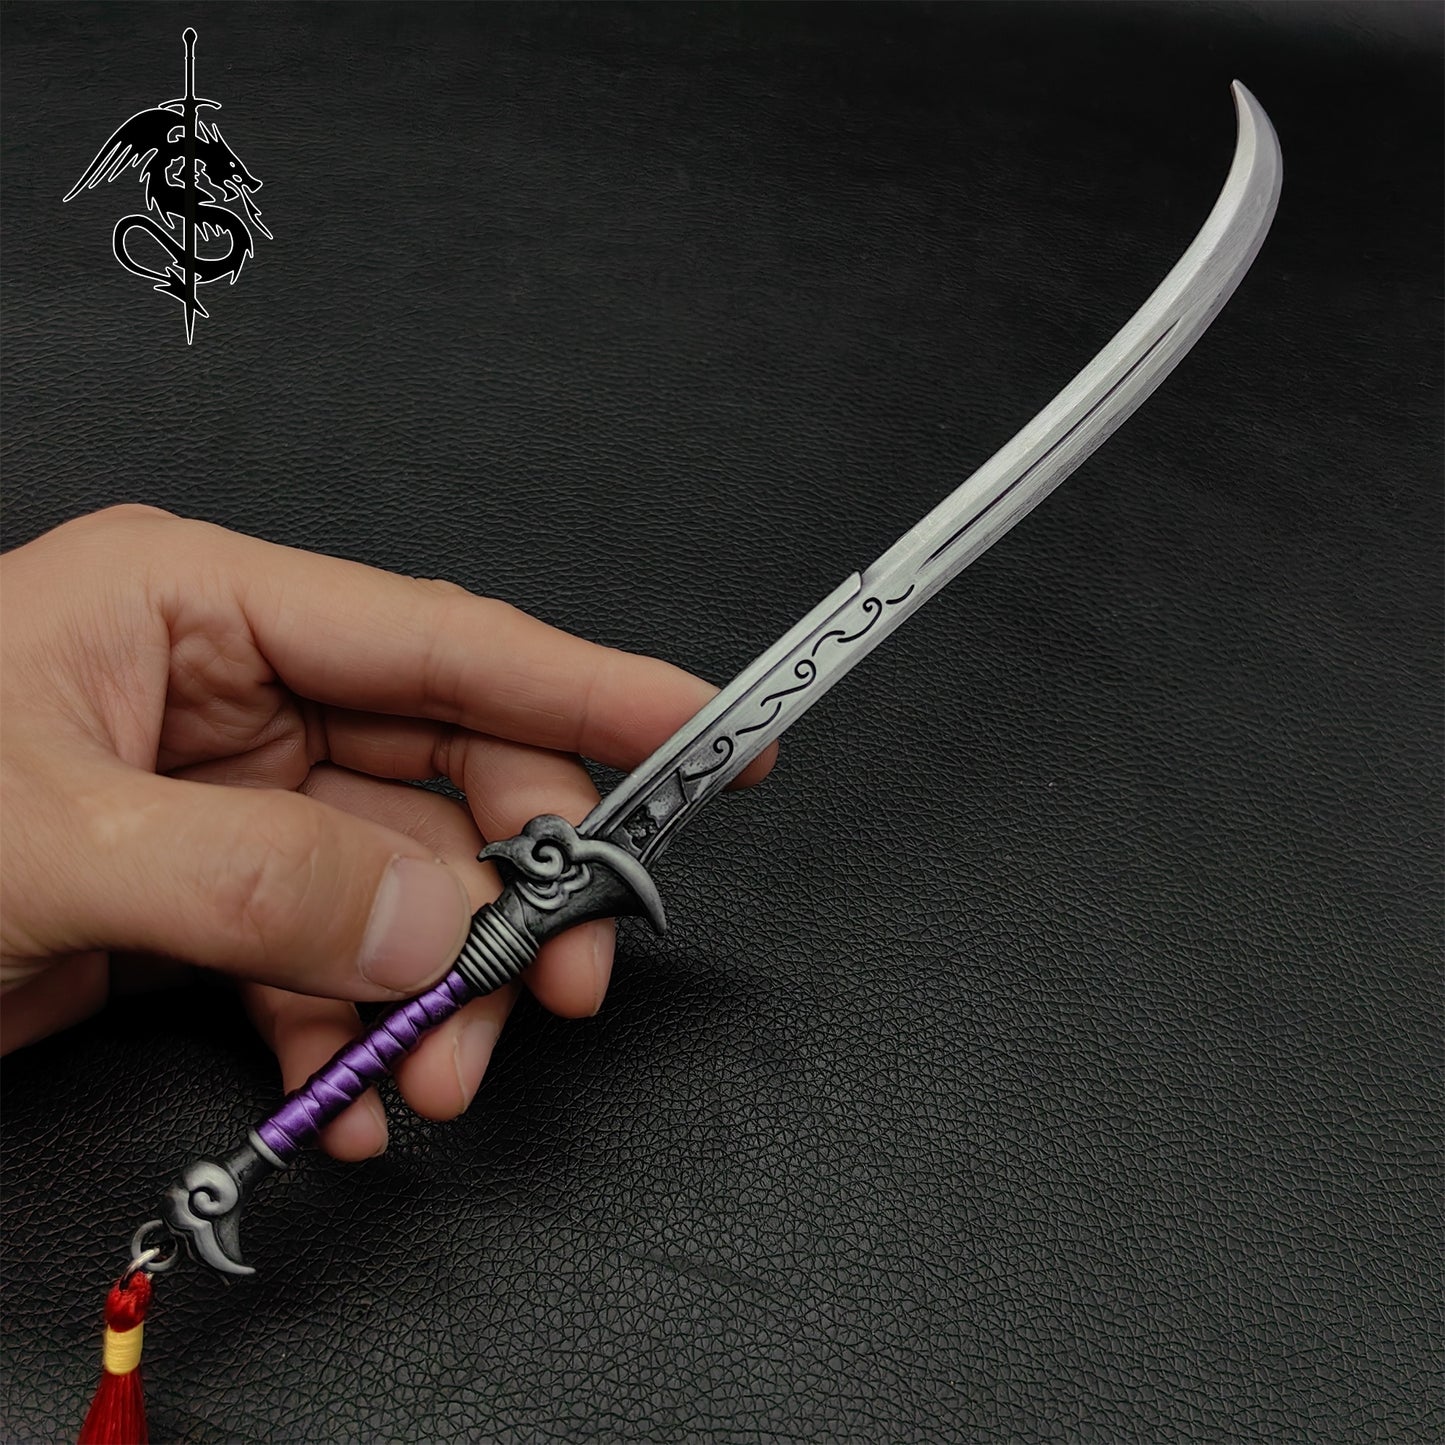 The Demon Hunter Ailmation Luocha Two-handed Sword Metal Replica